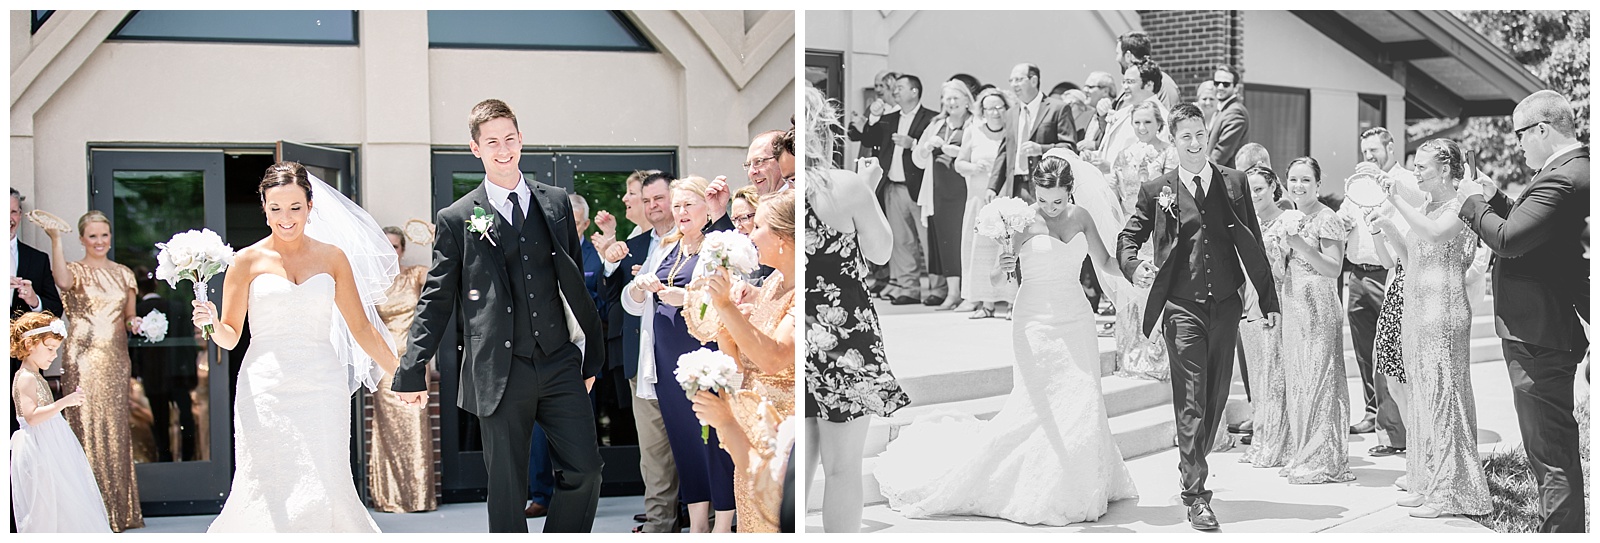 Wedding photography in Belton, Missouri by Kansas City wedding photographers Wisdom-Watson Weddings.